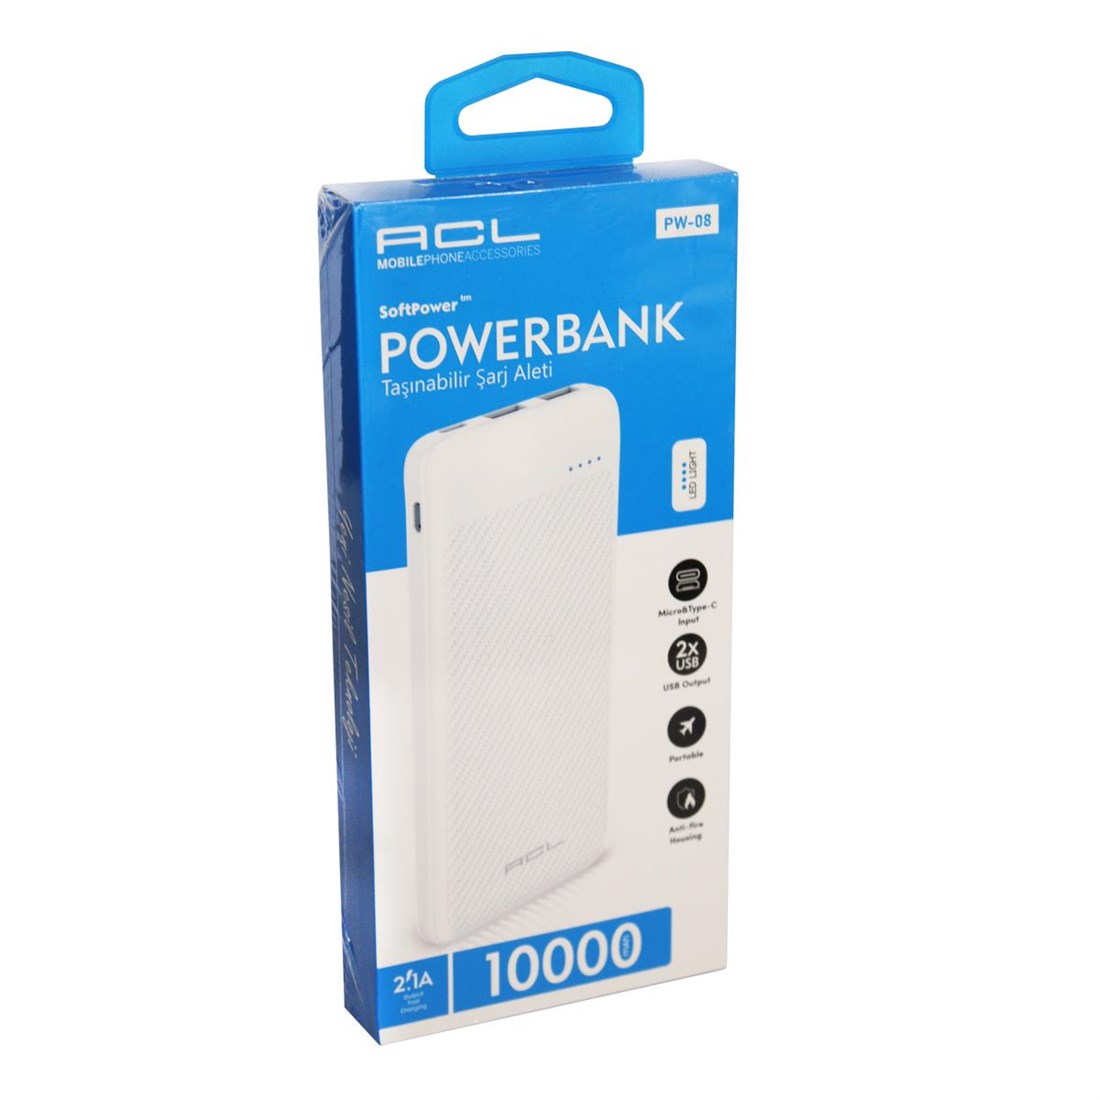 ACL PW-08 Powerbank 10000 mAh - ELK-05228